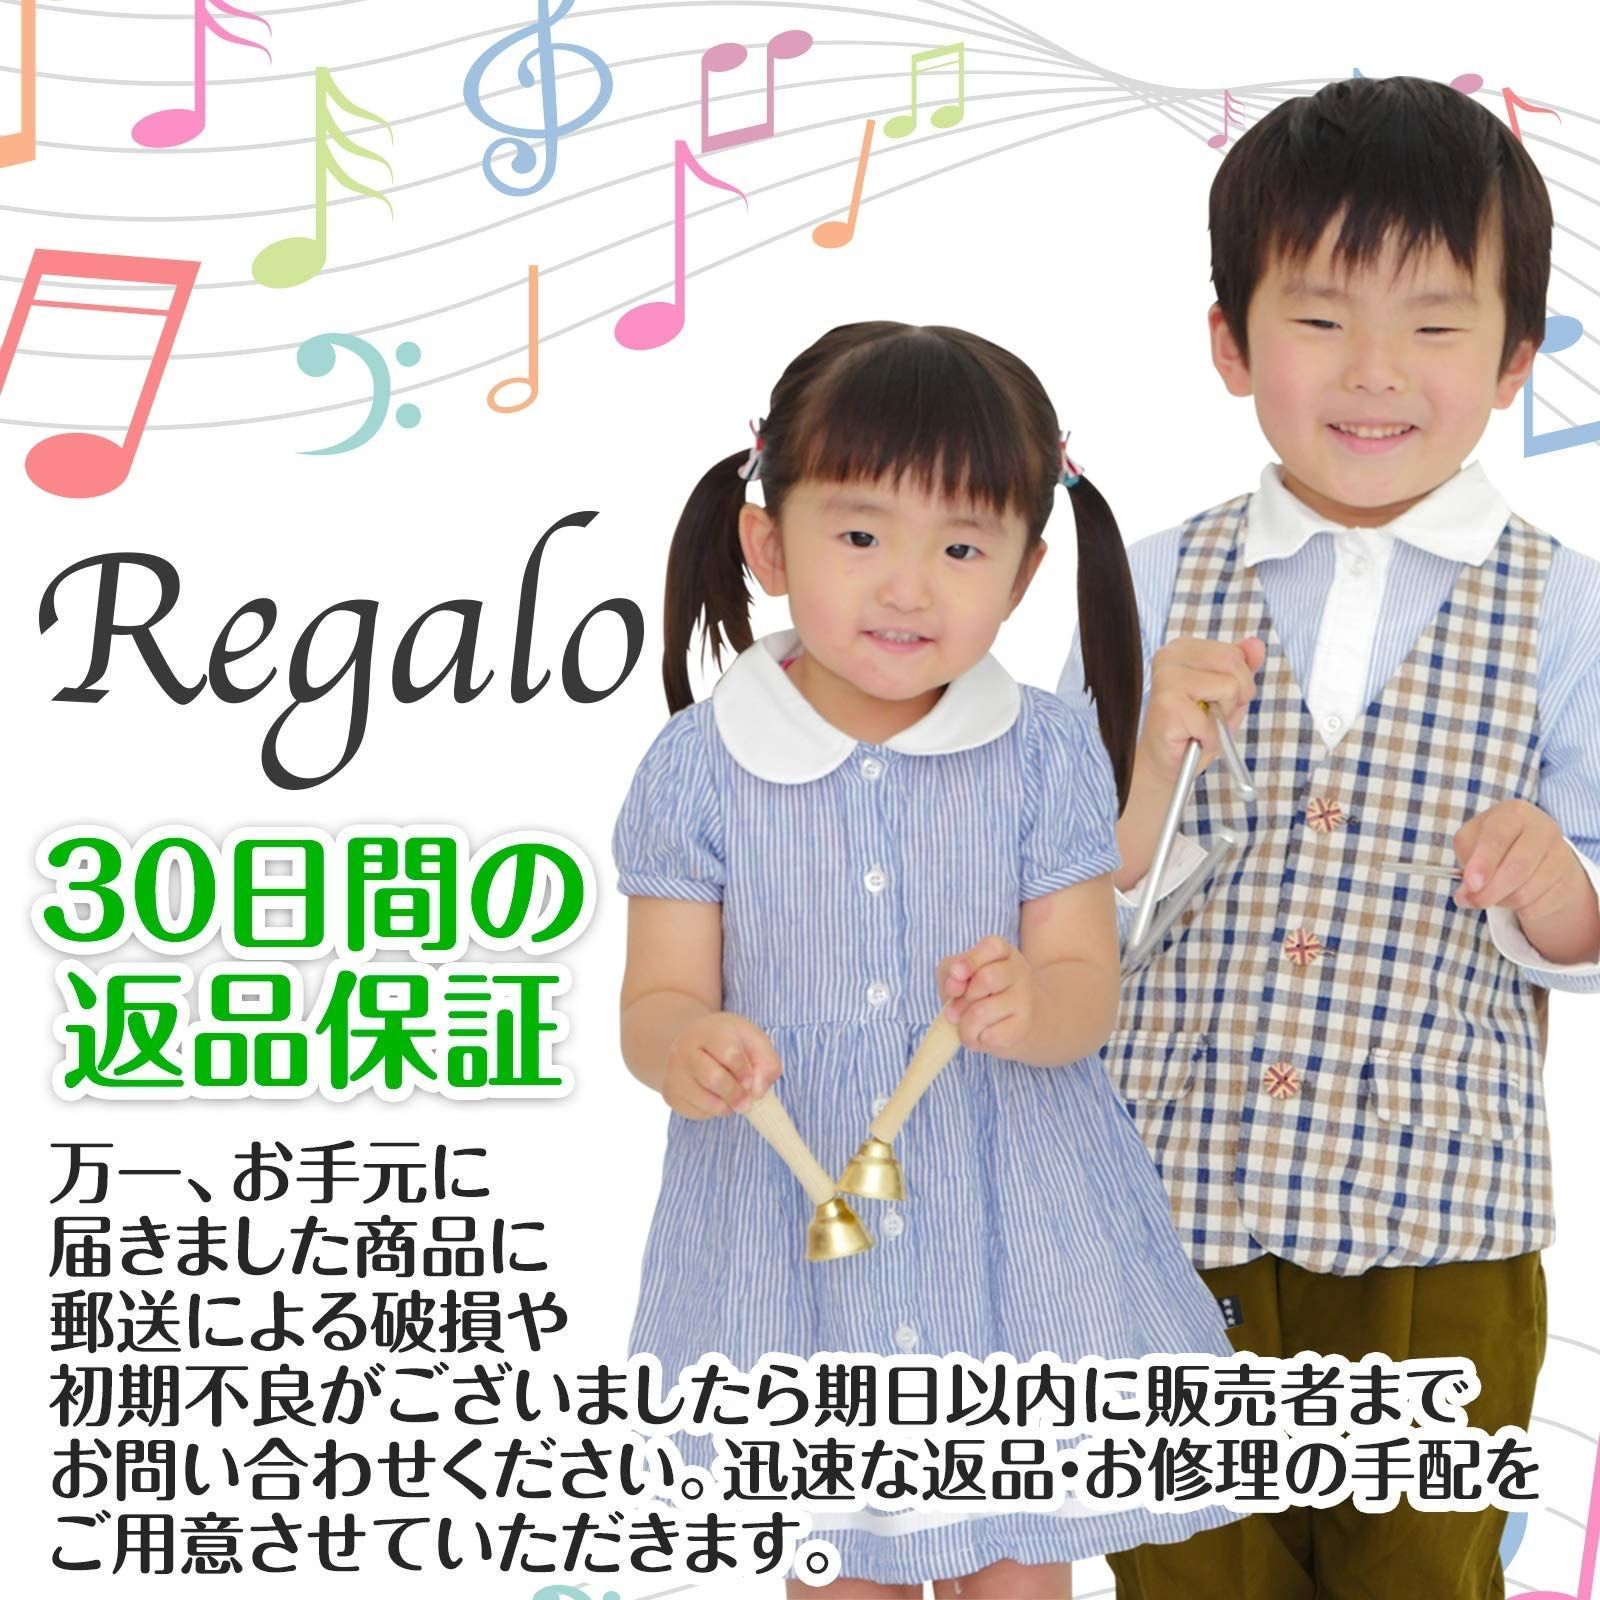 Regalo(レガロ) 知育 打楽器 セット 子供 おもちゃ 木 パーカッション